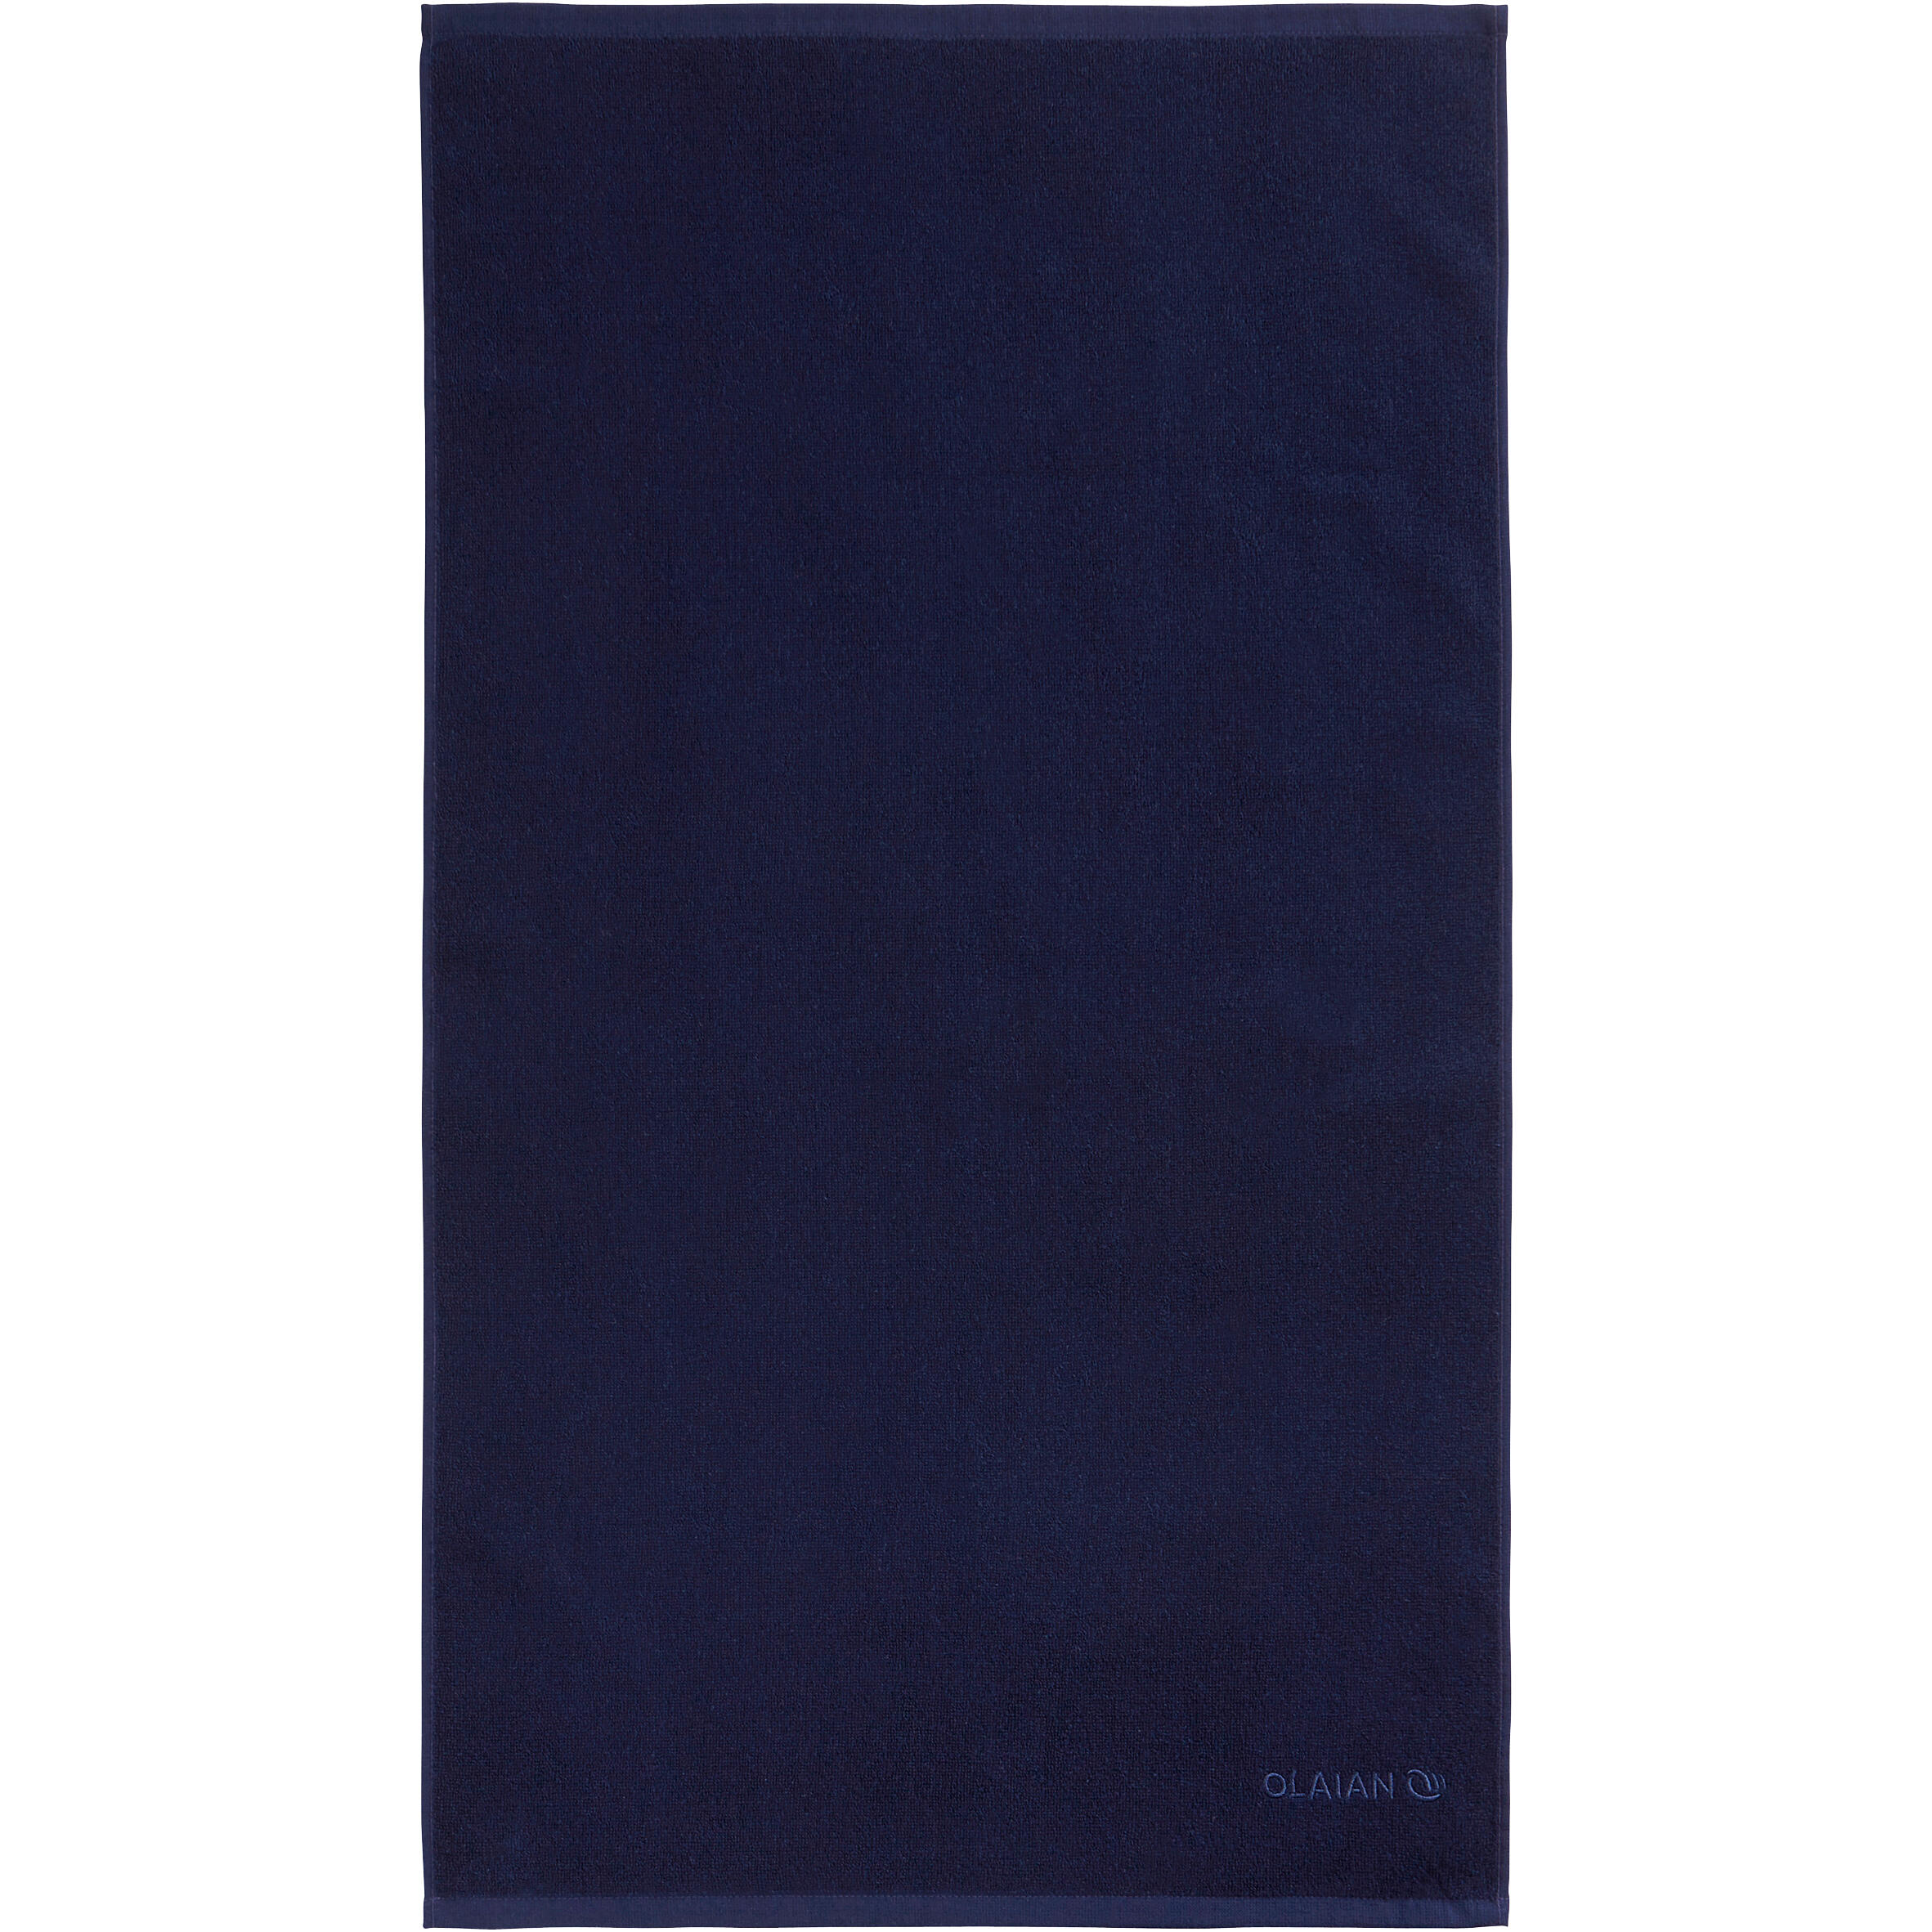 TOWEL S 90 x 50 cm - Dark Blue 1/4